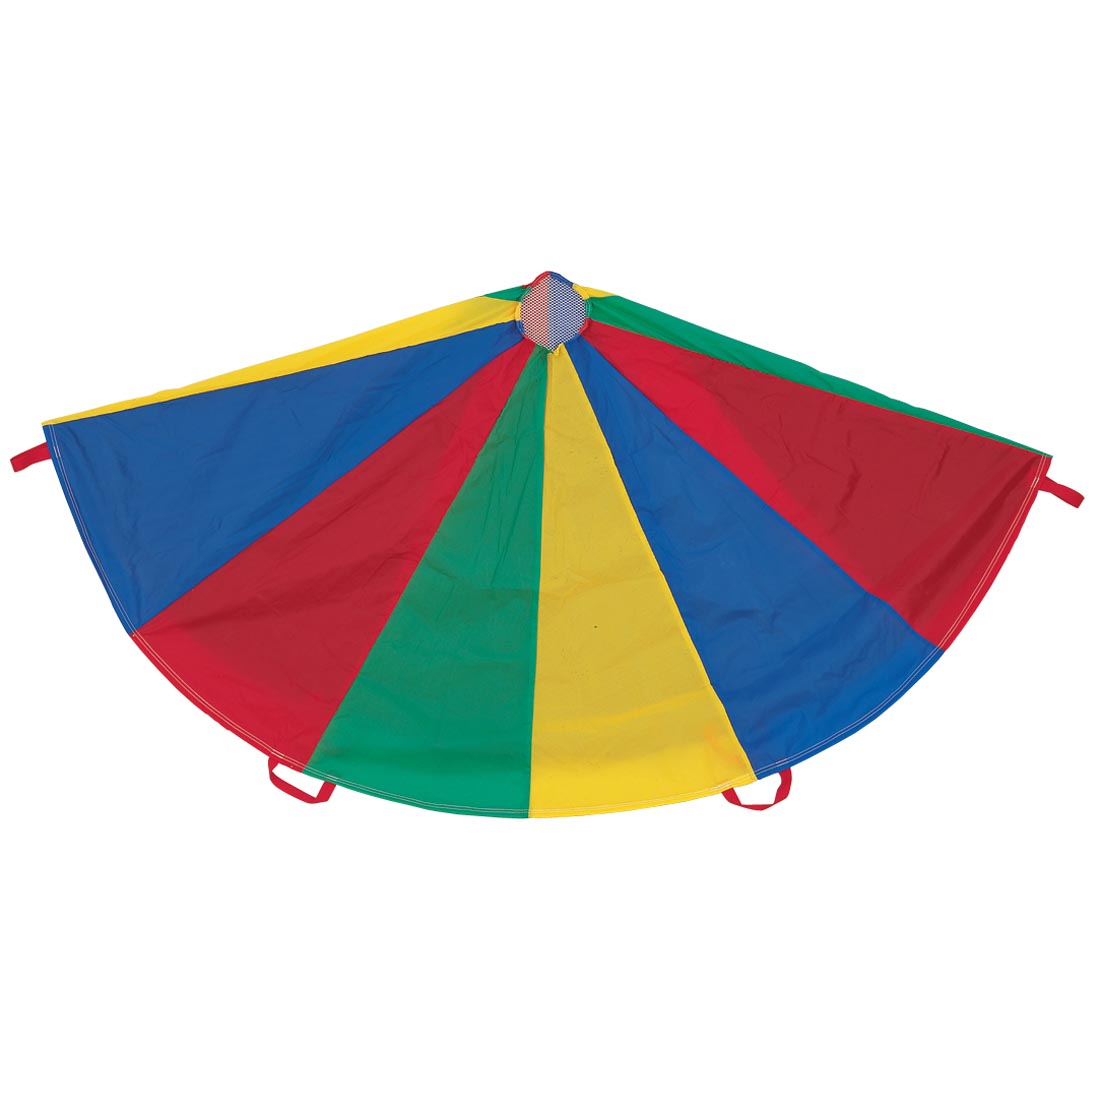 Multicolored Playground Parachute